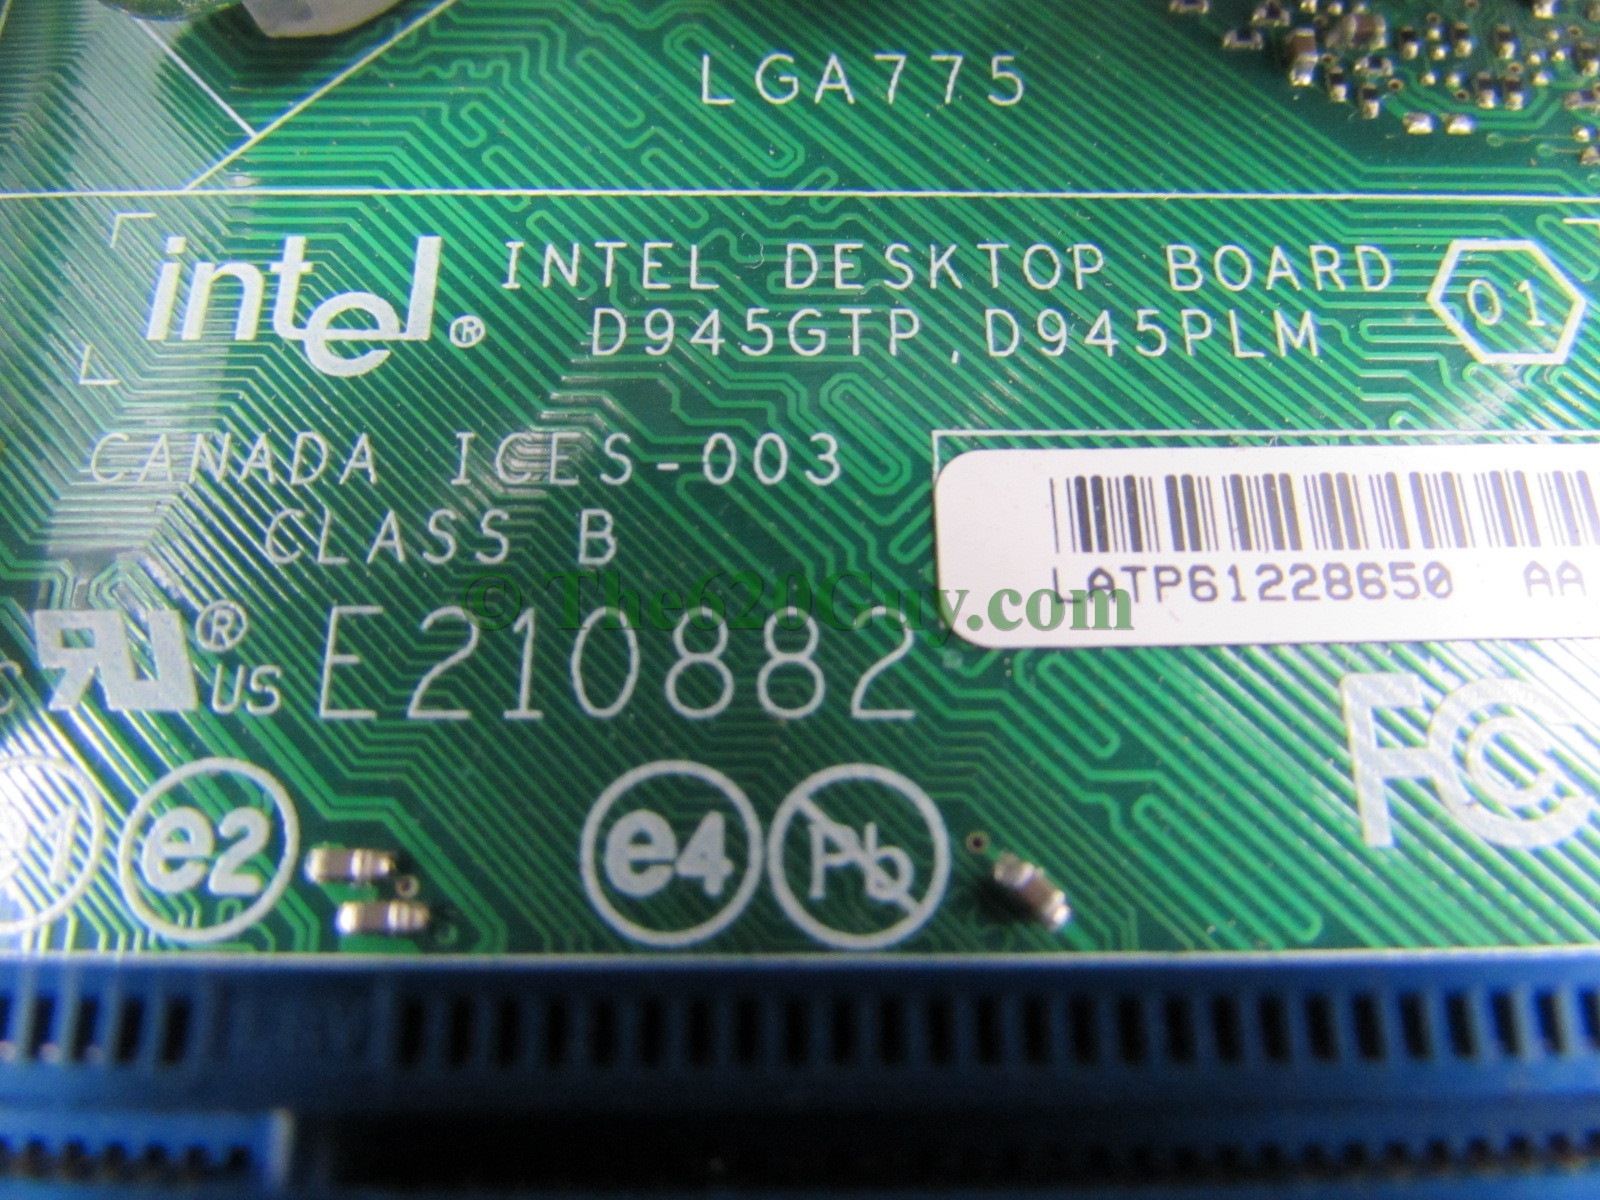 Intel lga775 motherboard drivers download for windows xp